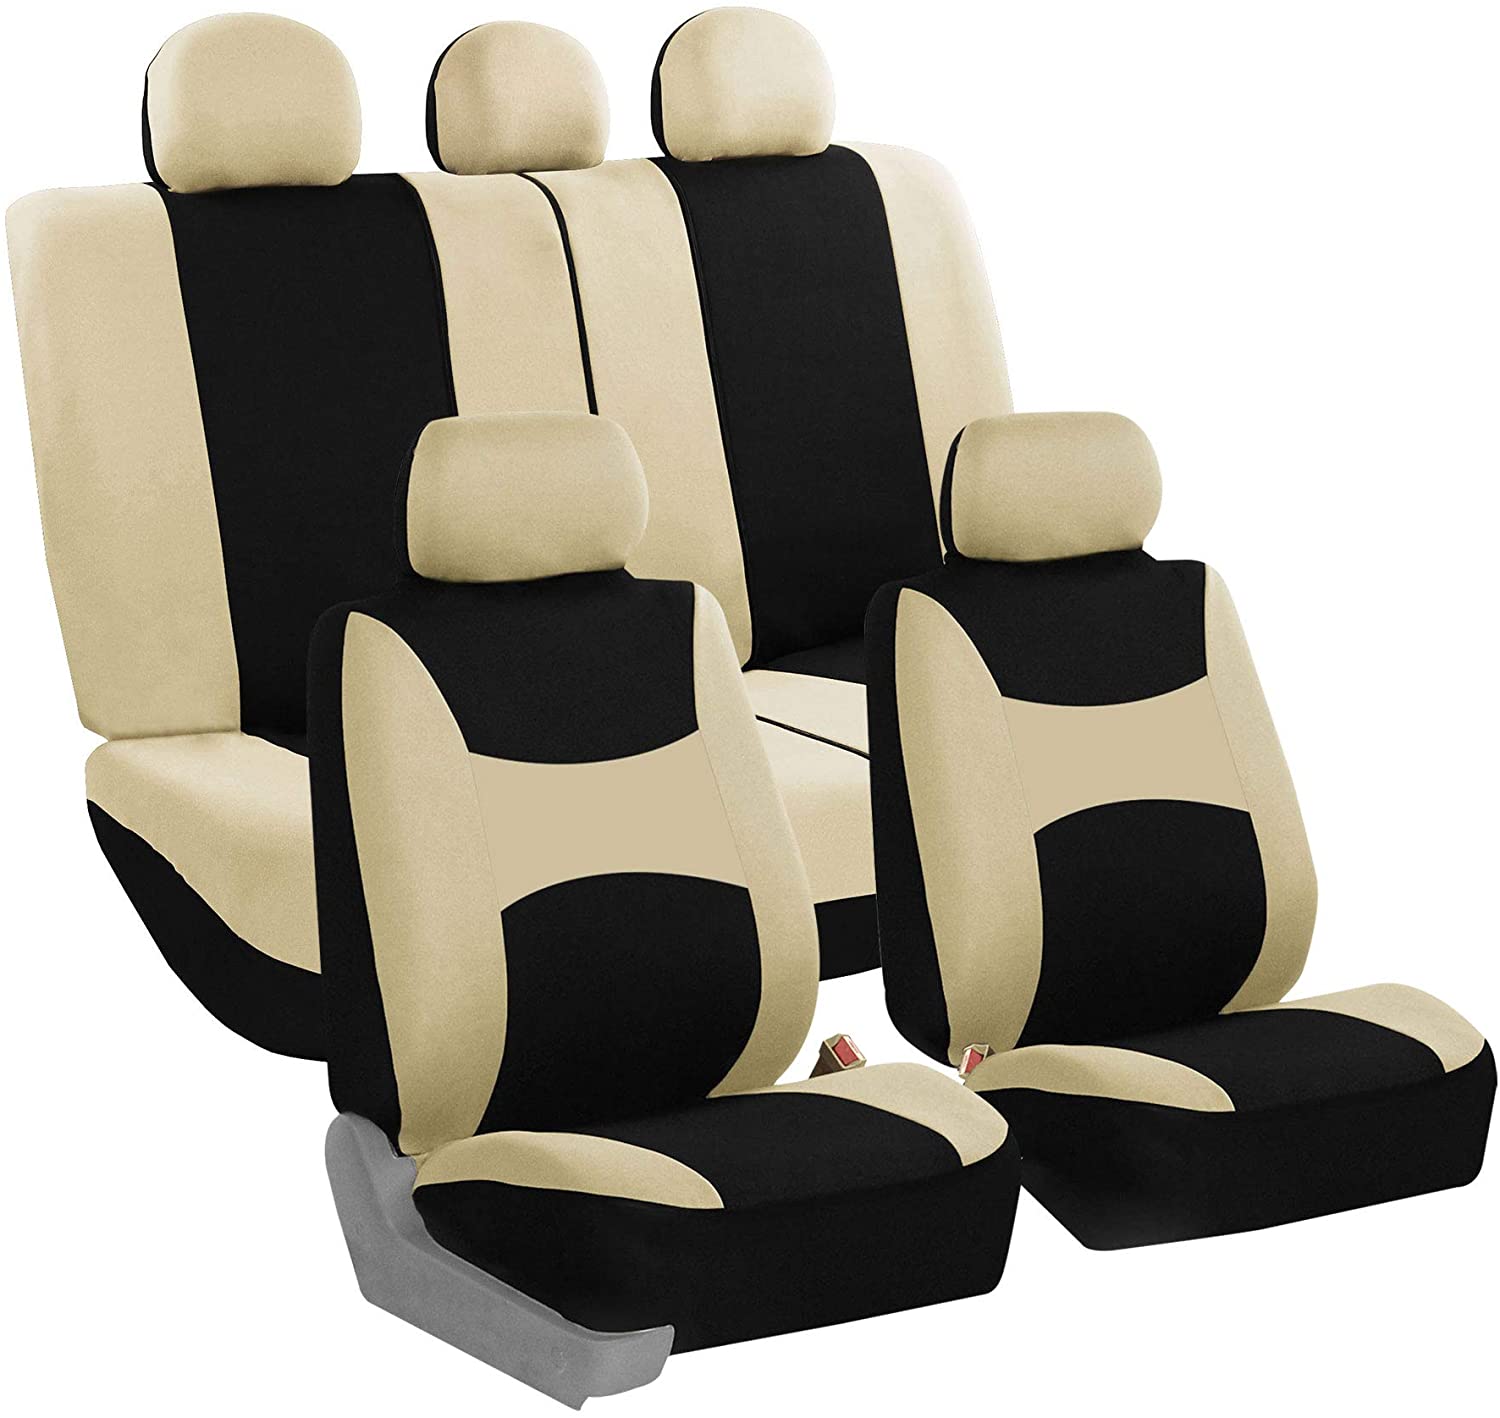 10 Best Seat Covers For Honda CRV Wonderful Engineering